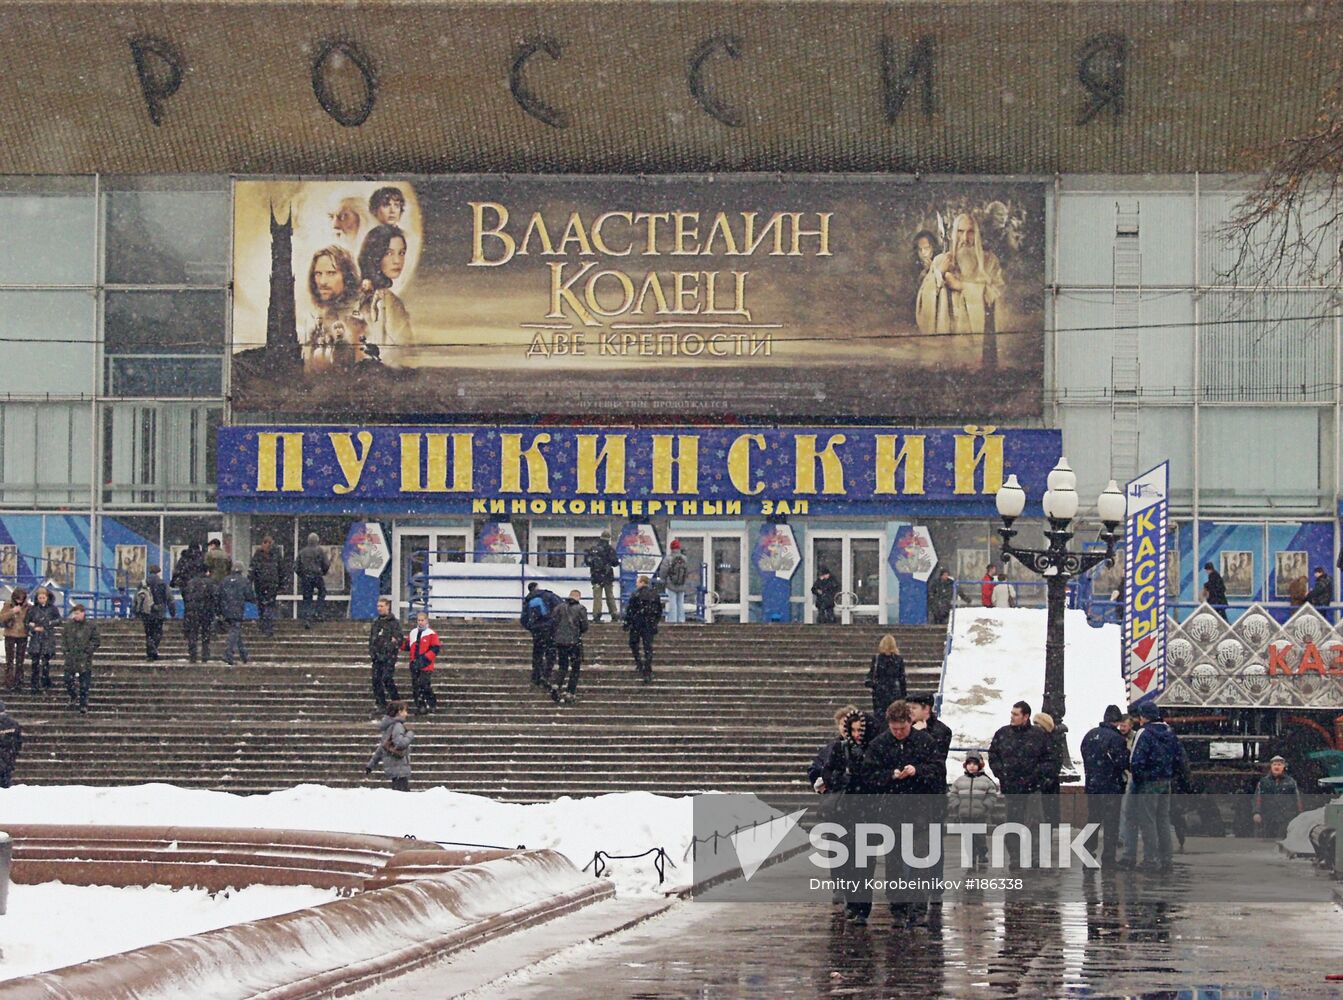 Pushkinsky, cinema hall, poster, movie